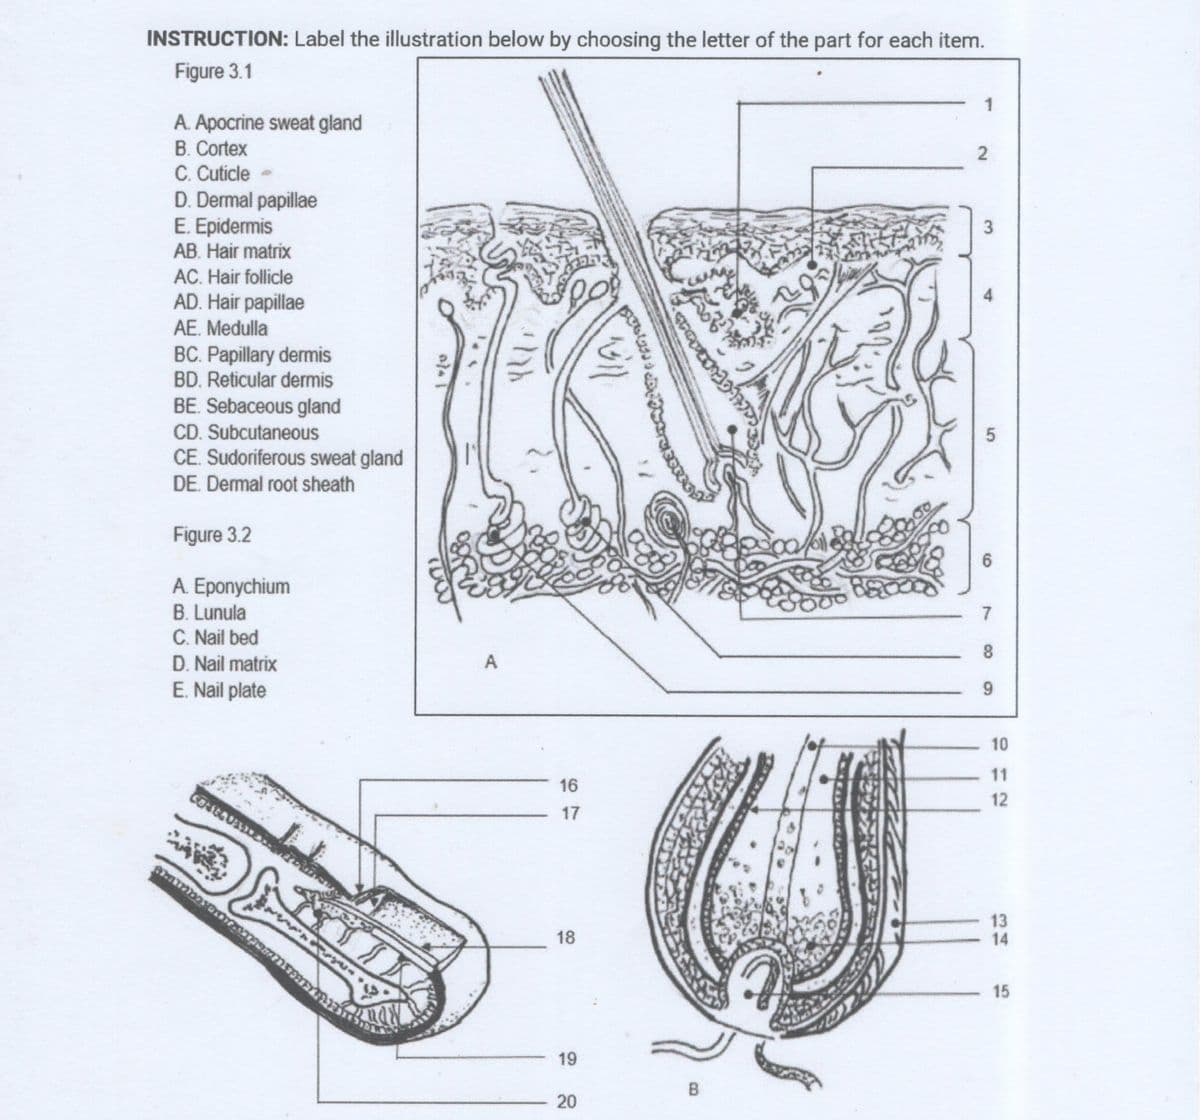 INSTRUCTION: Label the illustration below by choosing the letter of the part for each item.
Figure 3.1
1
A. Apocrine sweat gland
B. Cortex
C. Cuticle
D. Dermal papillae
E. Epidermis
AB. Hair matrix
3
AC. Hair follicle
AD. Hair papillae
AE. Medulla
BC. Papillary dermis
BD. Reticular dermis
BE. Sebaceous gland
CD. Subcutaneous
CE. Sudoriferous sweat gland
DE. Dermal root sheath
Figure 3.2
6
A. Eponychium
B. Lunula
C. Nail bed
D. Nail matrix
E. Nail plate
7
8
9
10
11
16
17
13
14
18
B
20
15
5,
19
